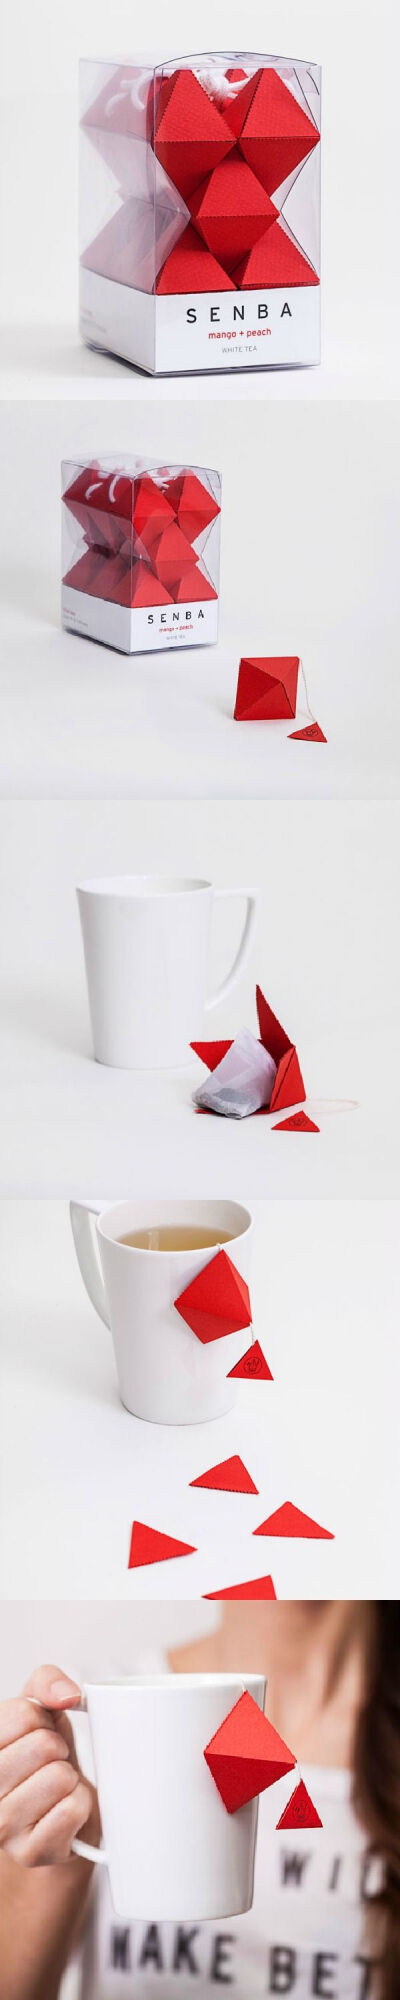 Senba tea design by Seita Goto. Awesome #tea #packaging PD